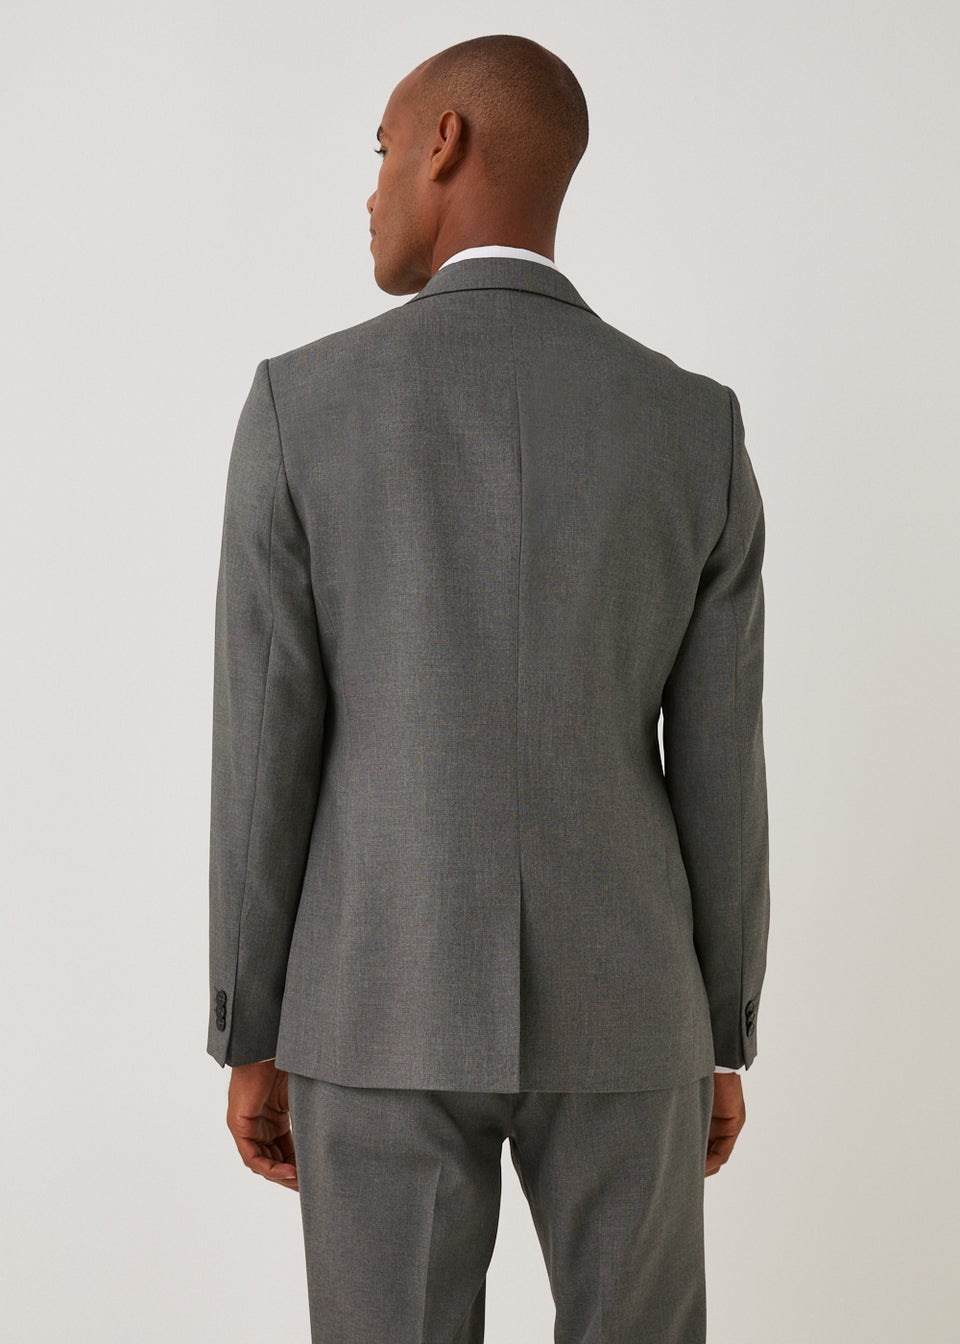 Taylor & Wright Austen Charcoal Slim Fit Suit Jacket - Matalan